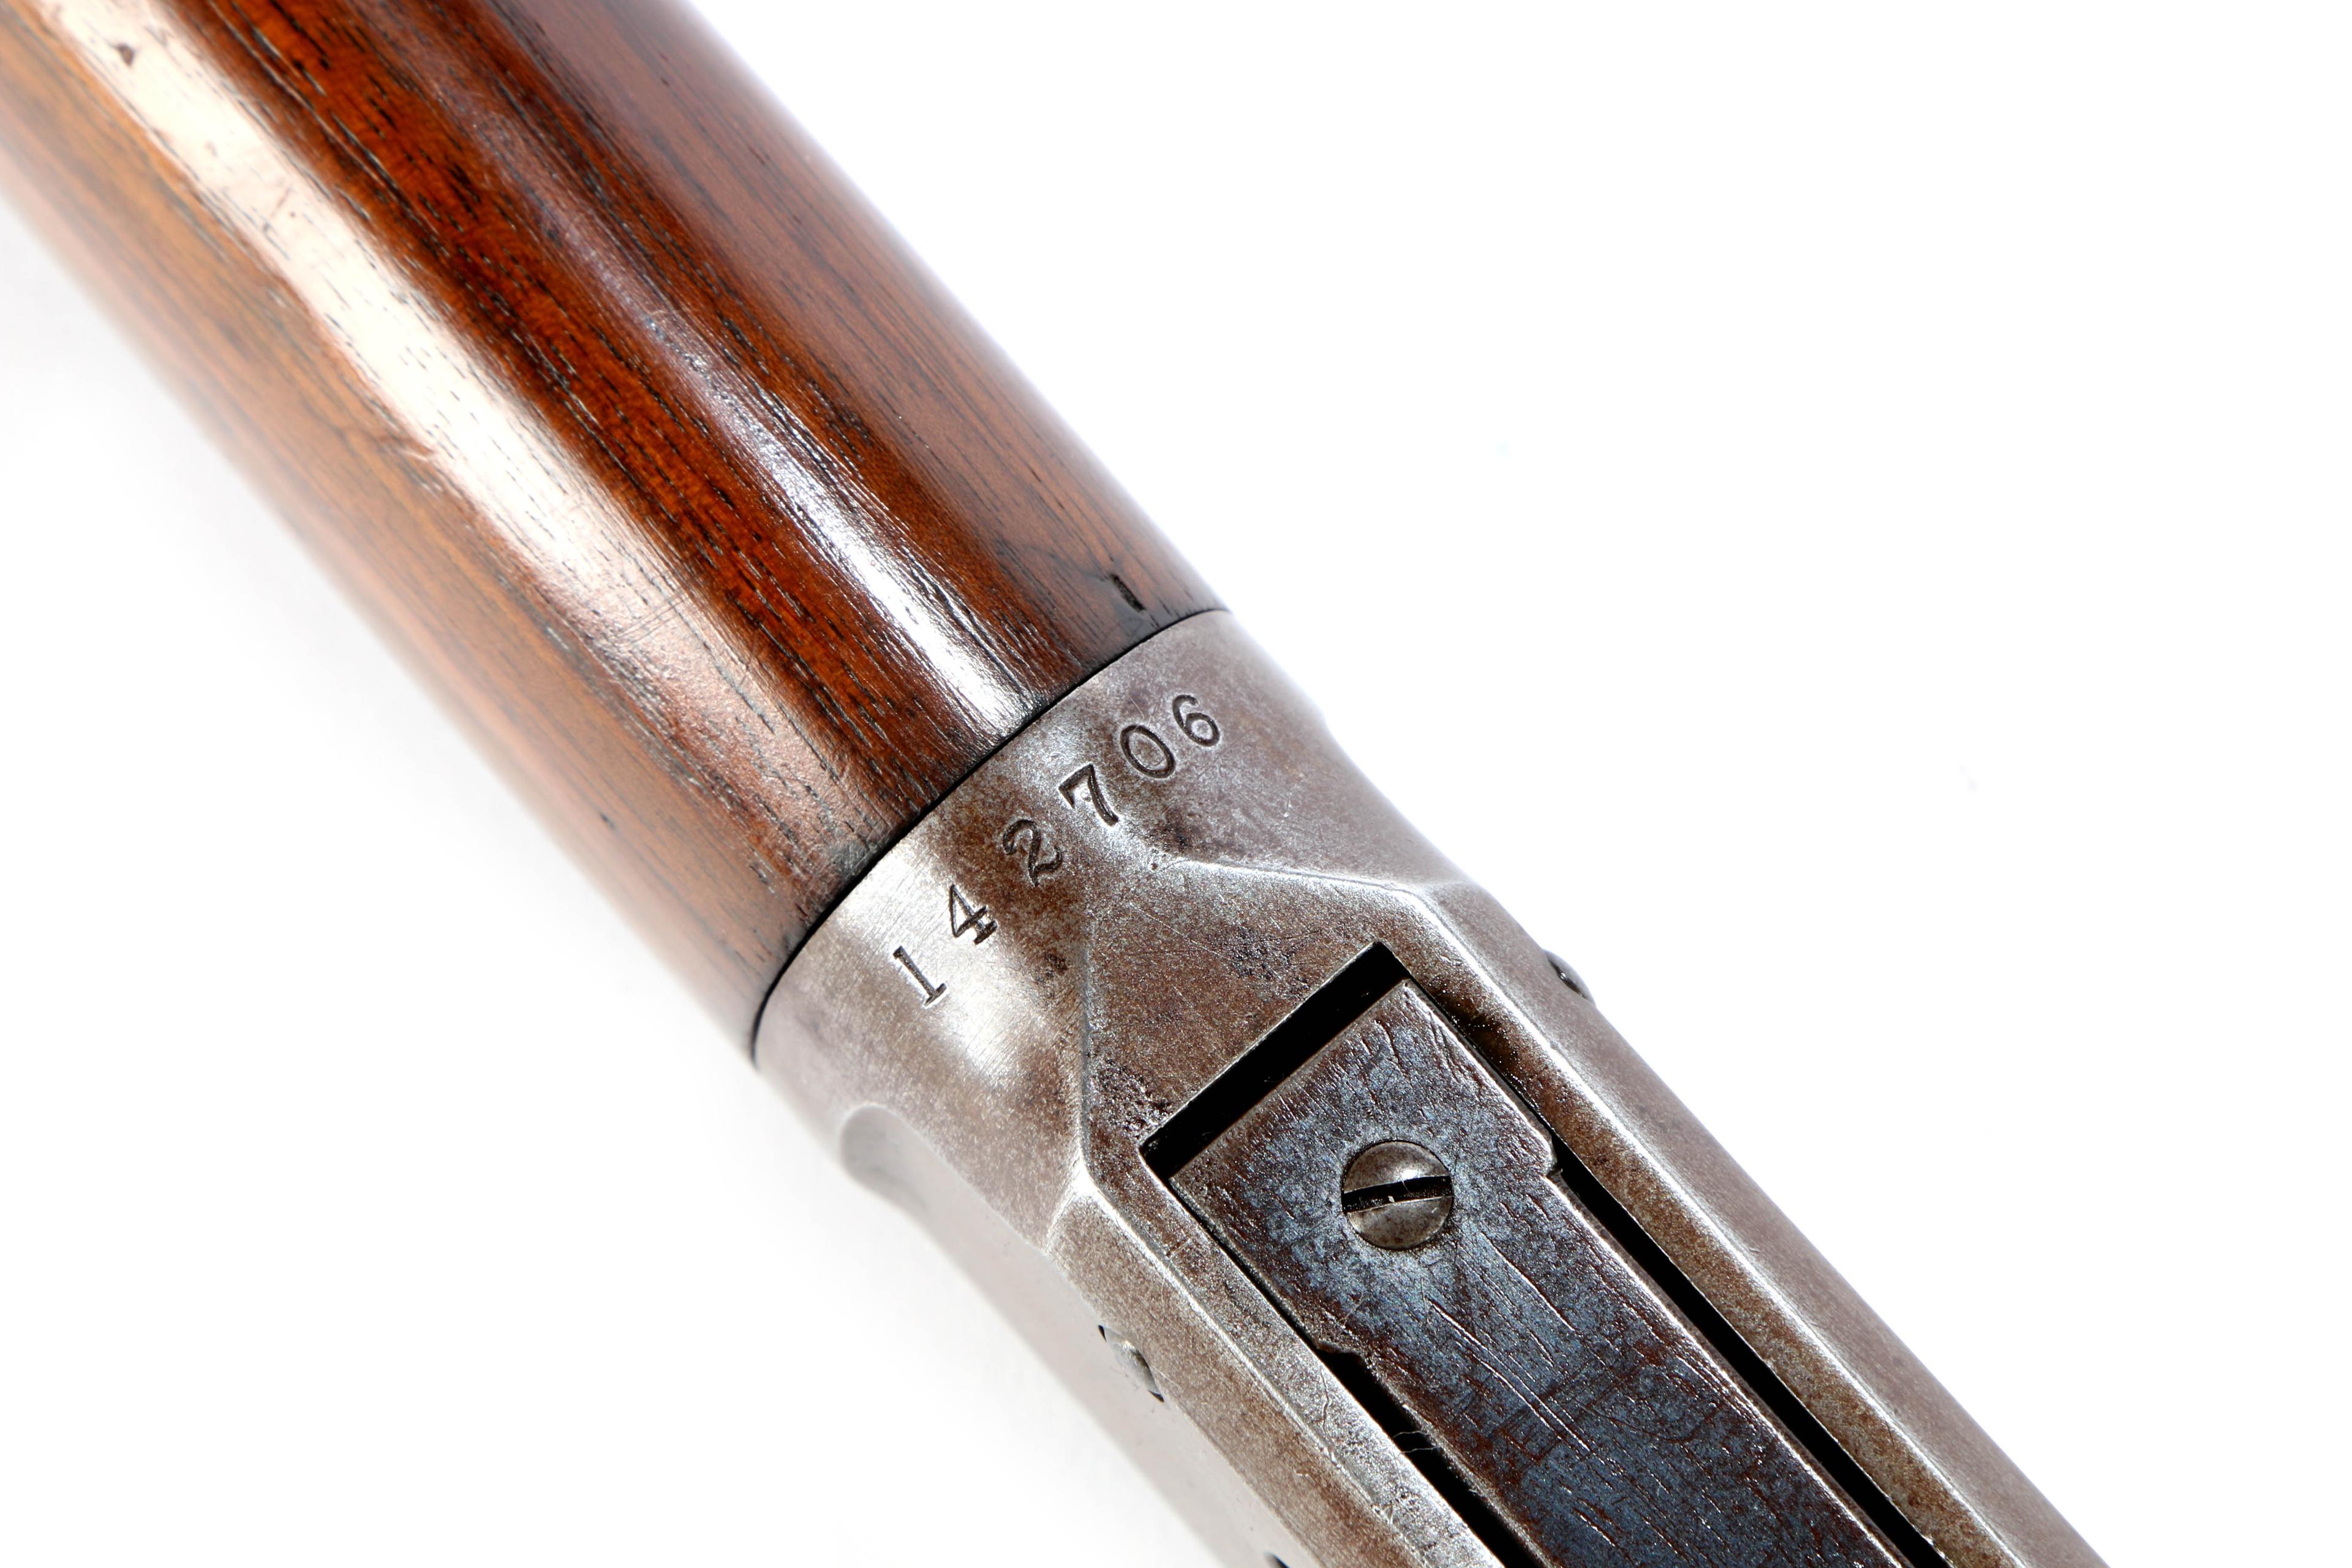 Winchester Model 1894 in .25/.35 WCF